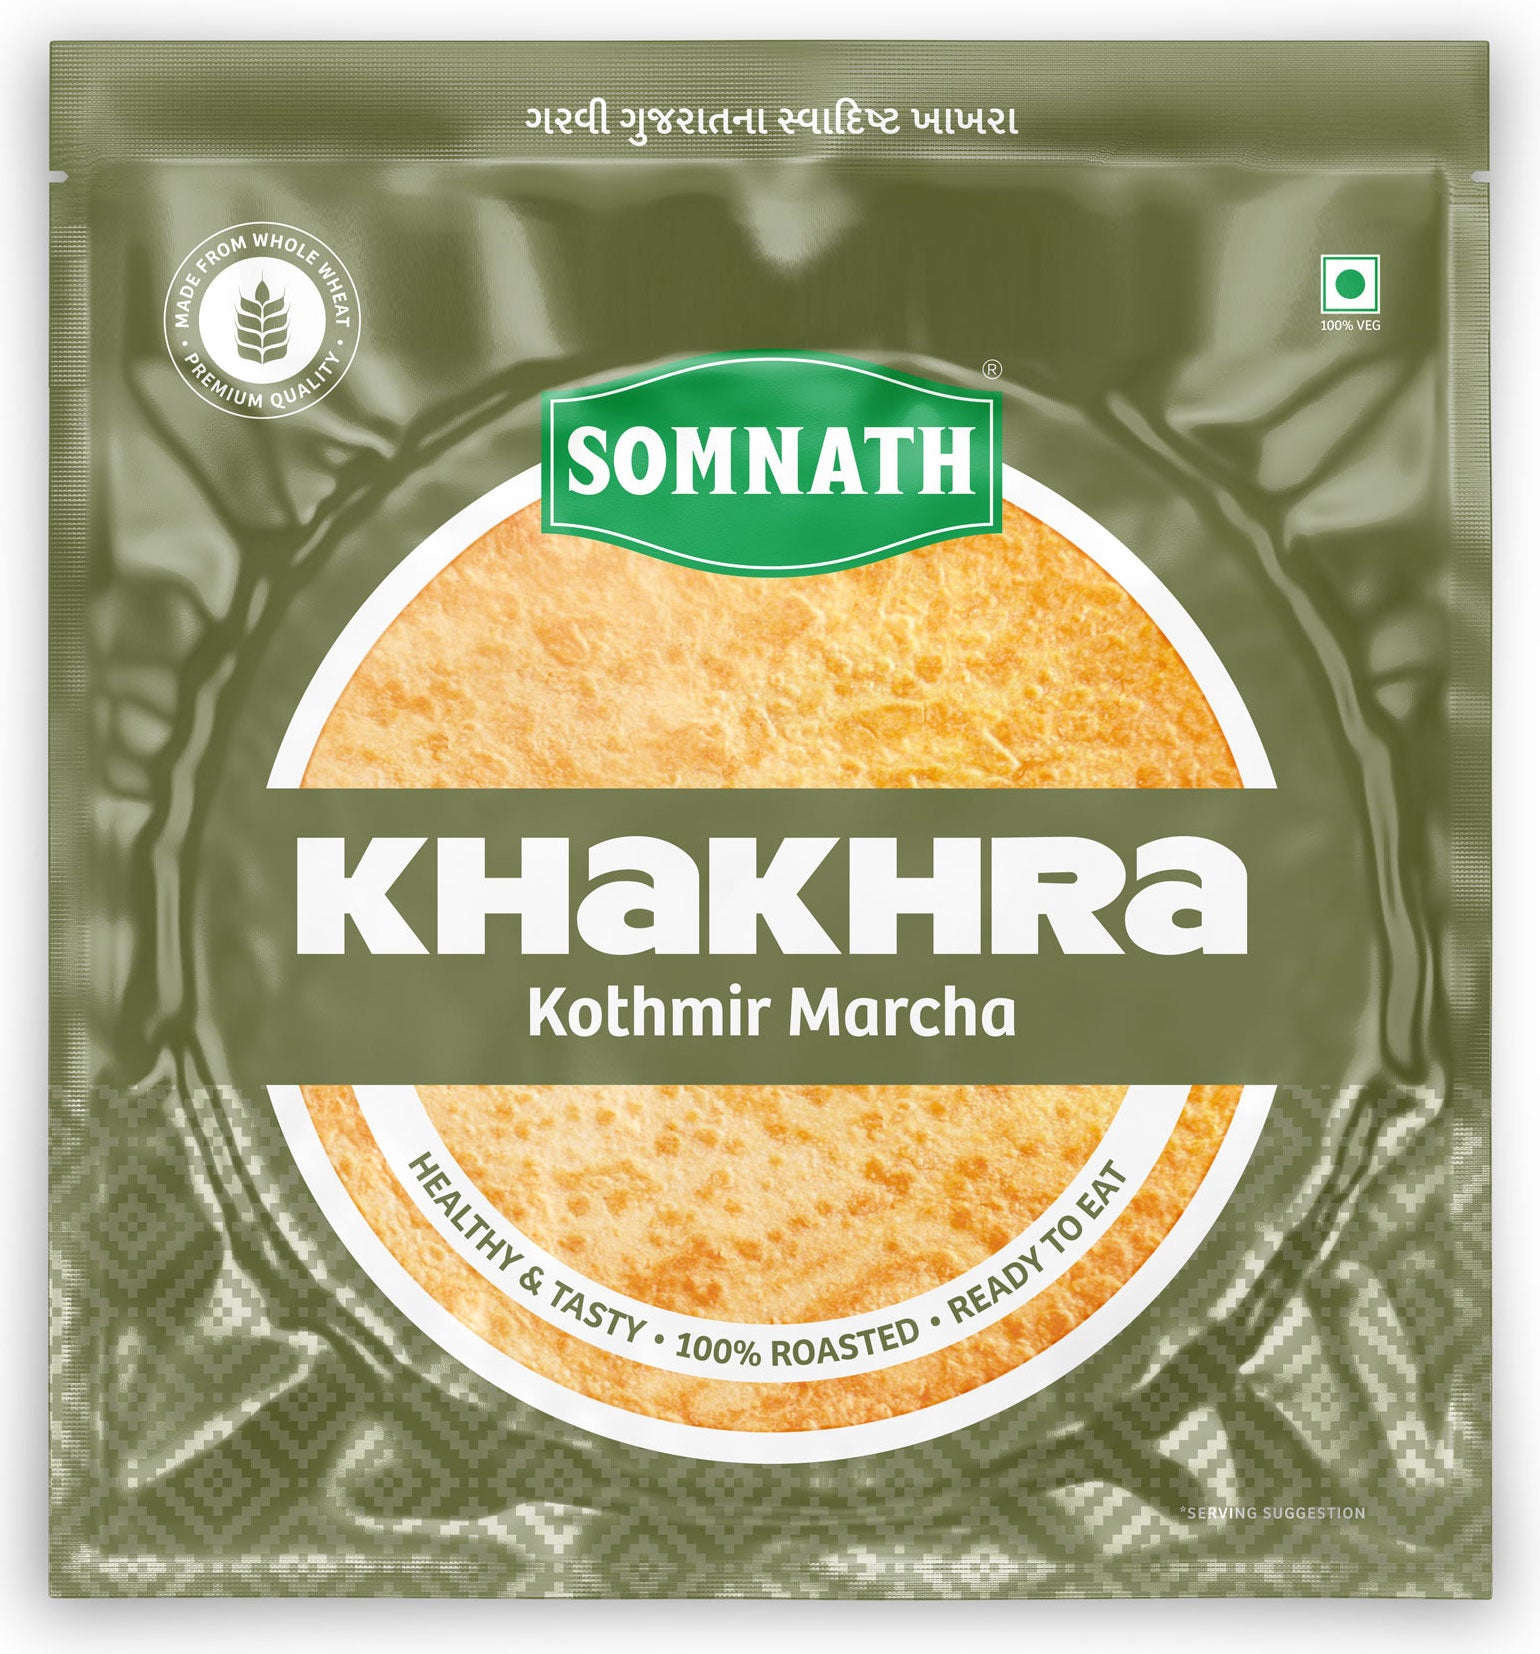 Spicy Khakhra Combo(Masala x 2, Garlic Chilli x 2, Kothmir Marcha x 2).